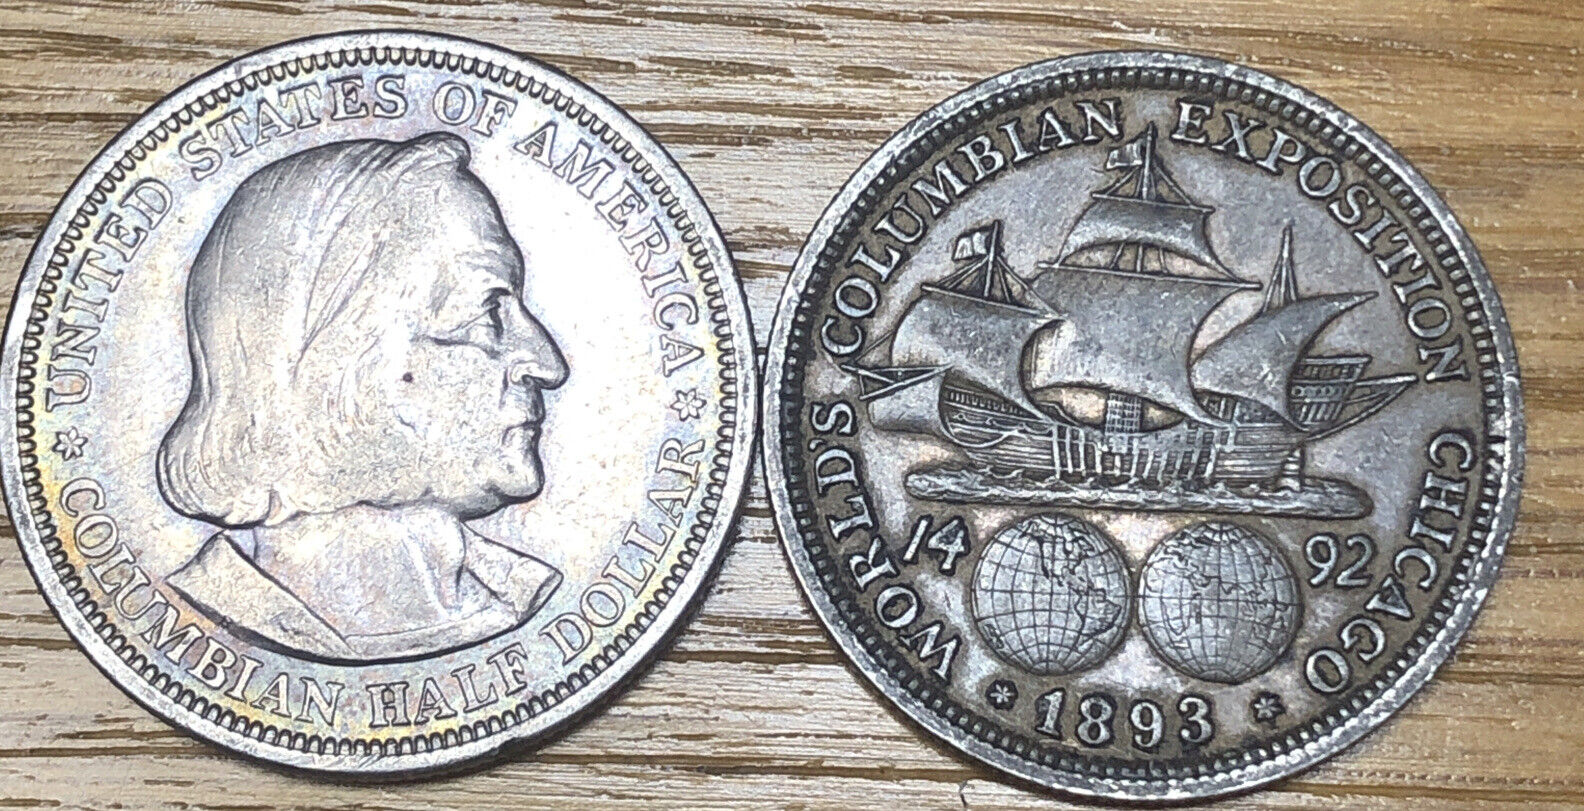 SC Commerative Columbian 1993 Coin Bid Is Per Coin